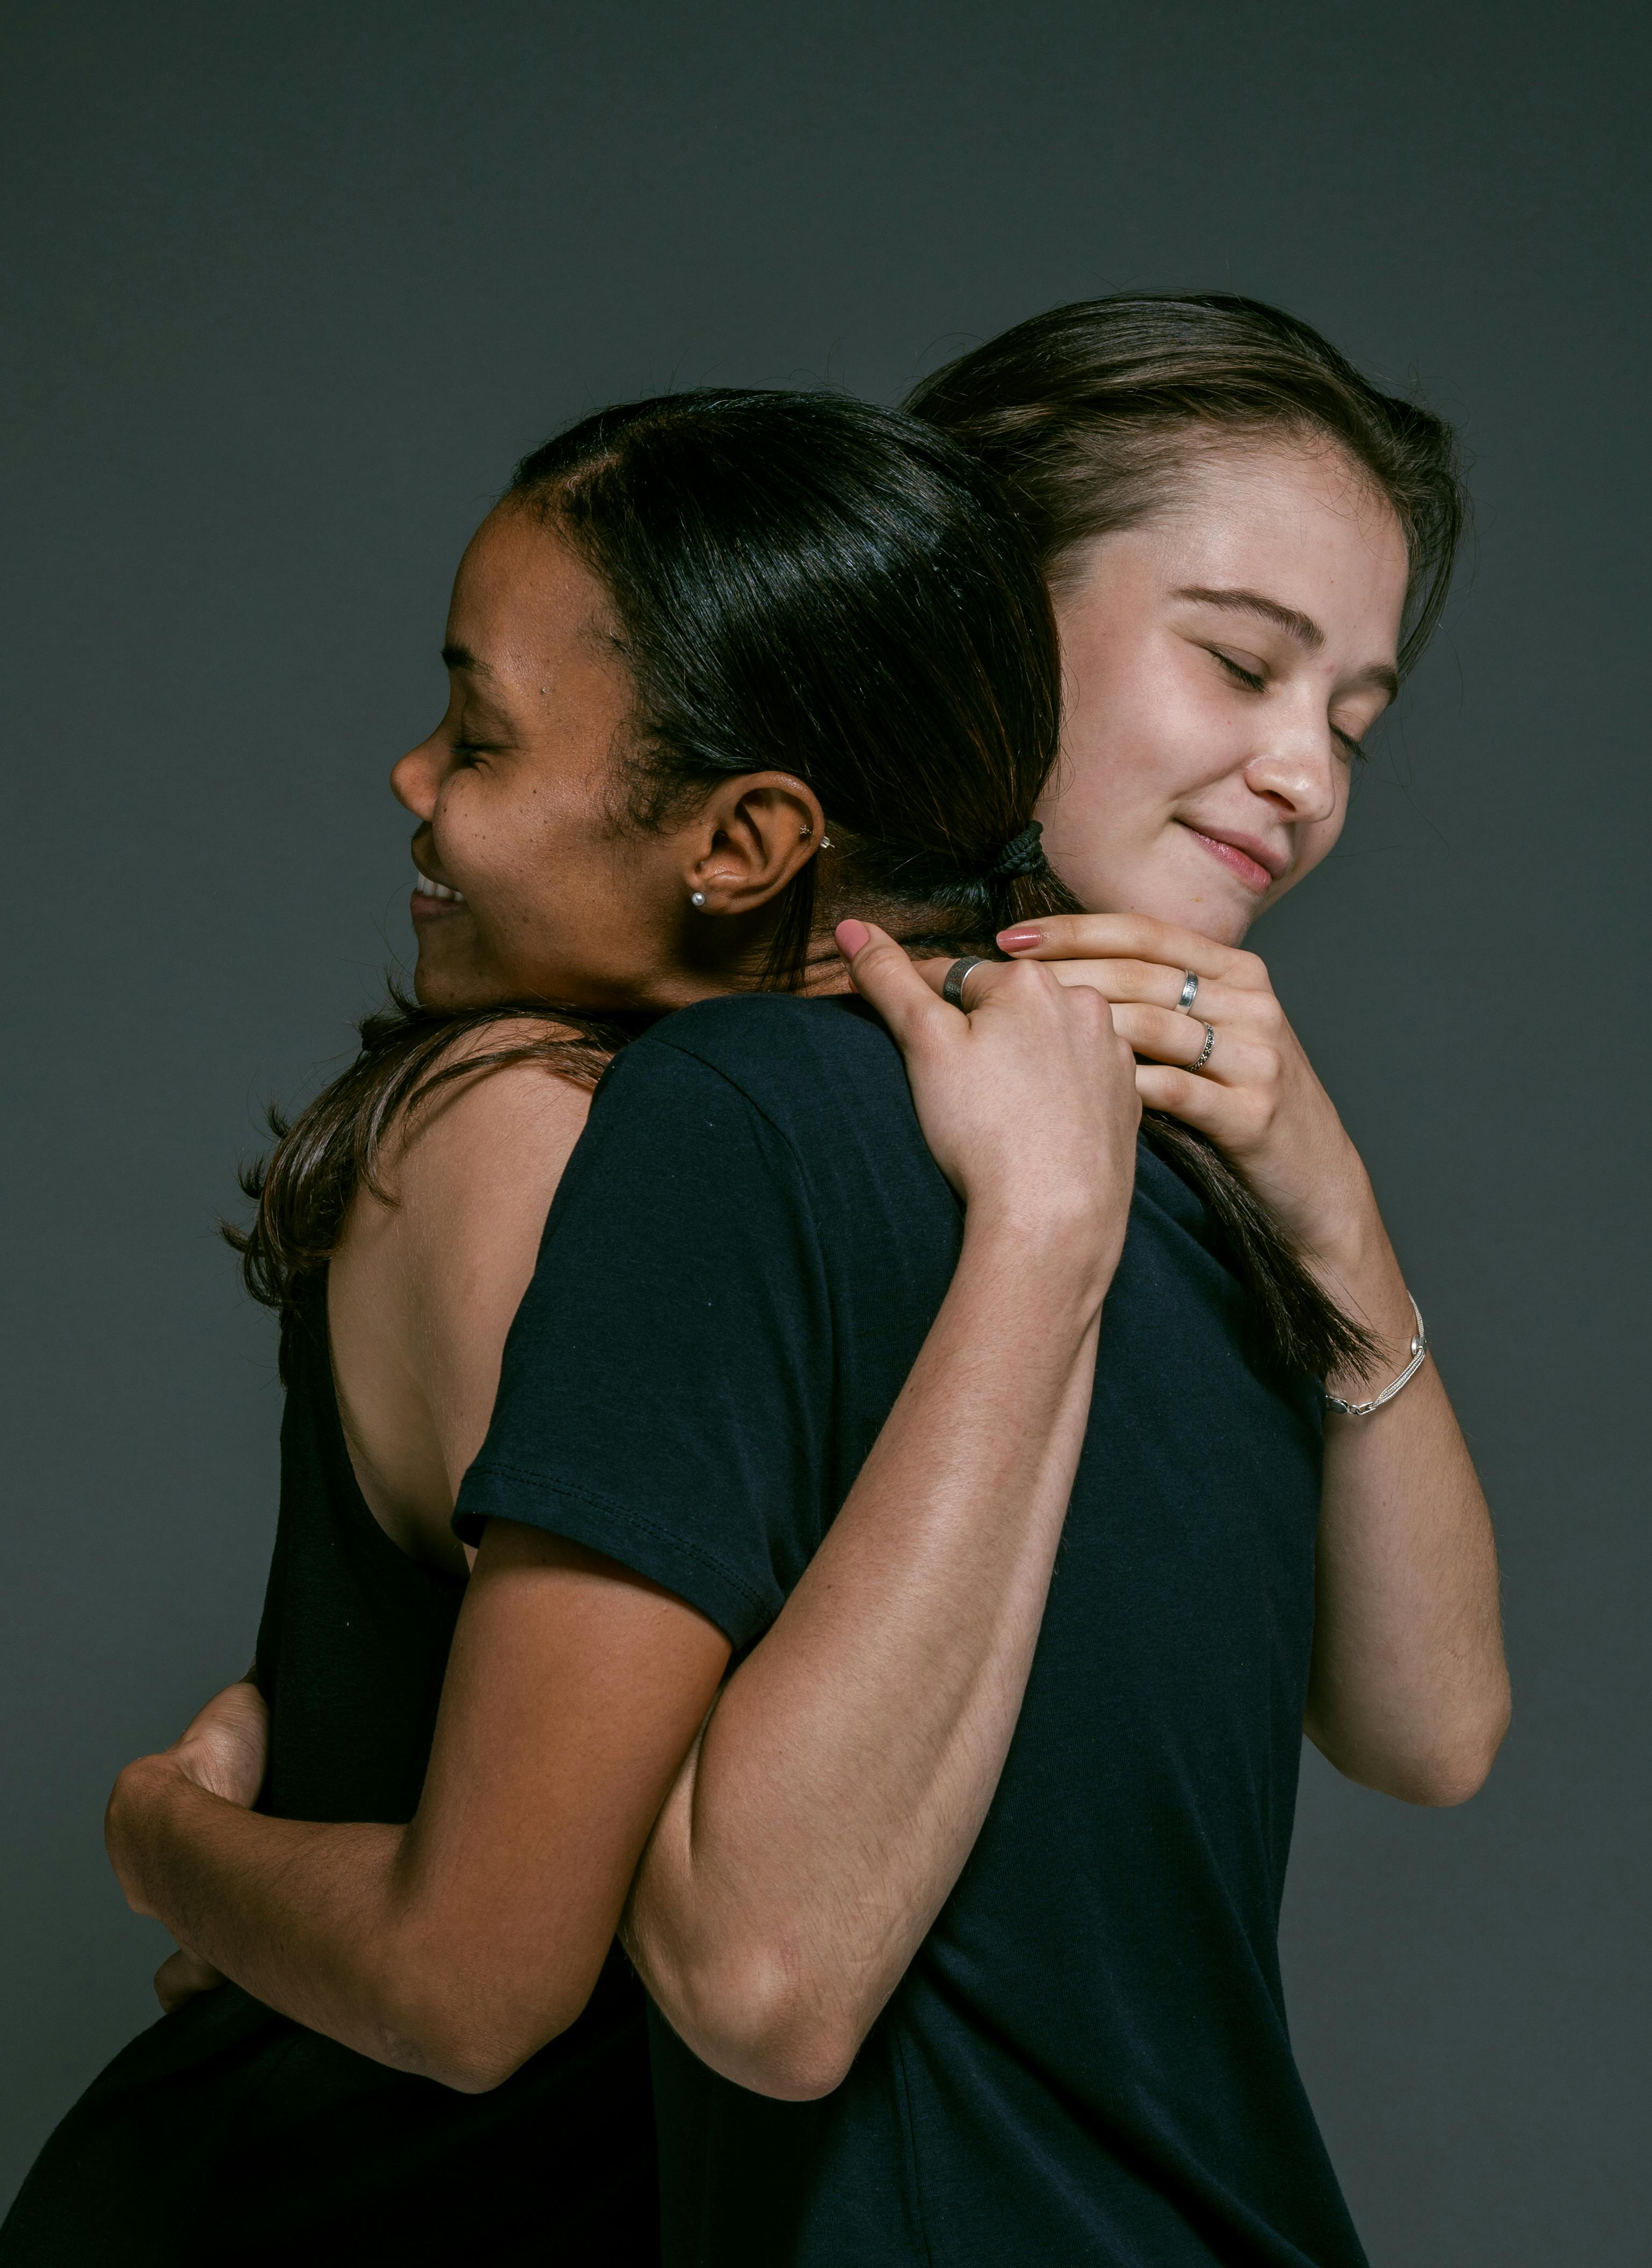 Two women hugging | Source: Pexels